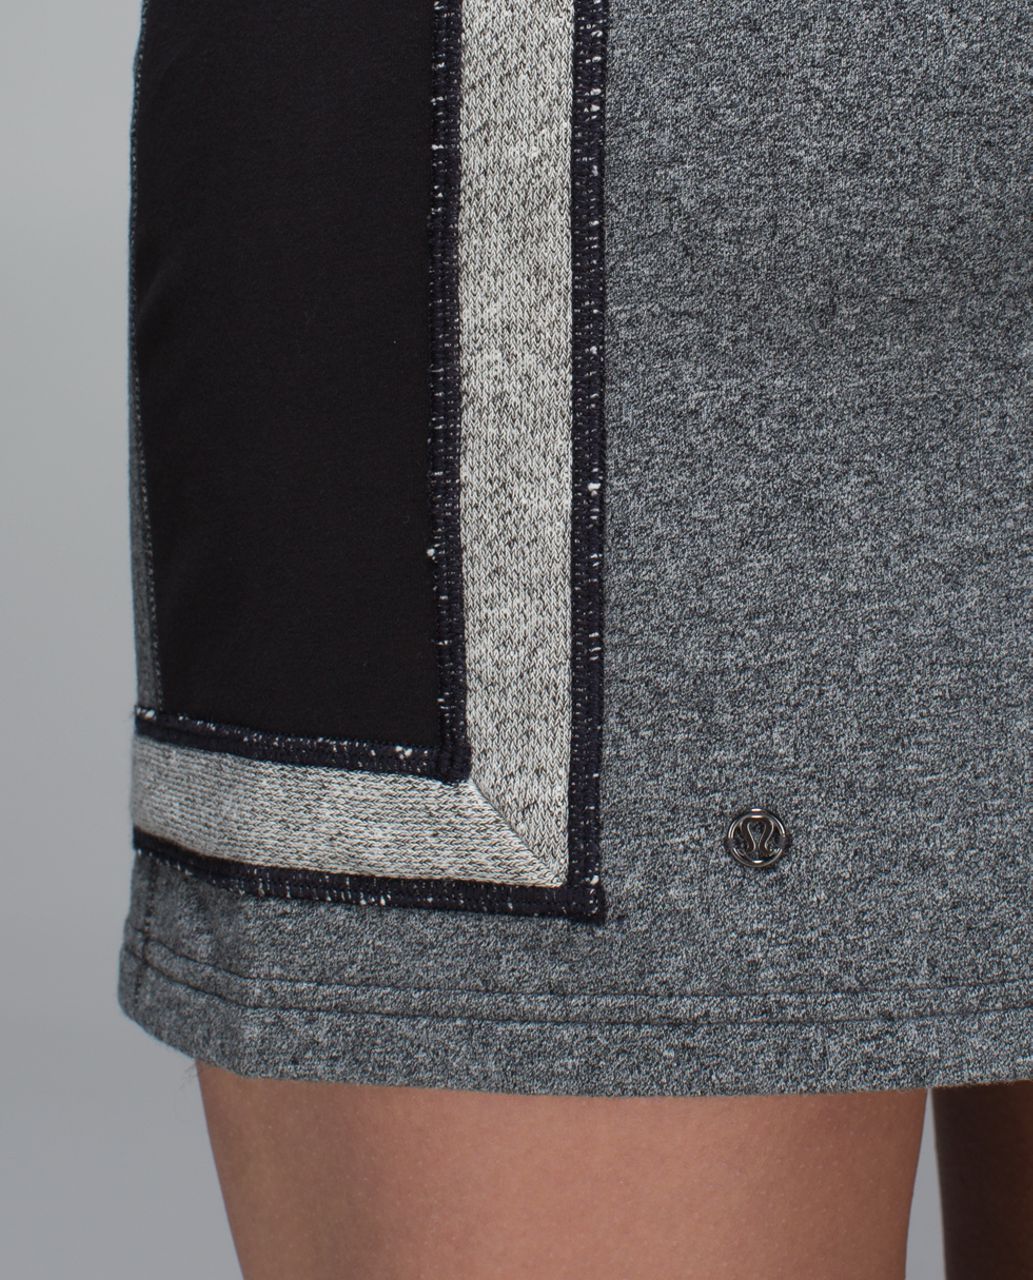 Lululemon Refresh Skirt - Heathered Speckled Black / Heathered Black / Black